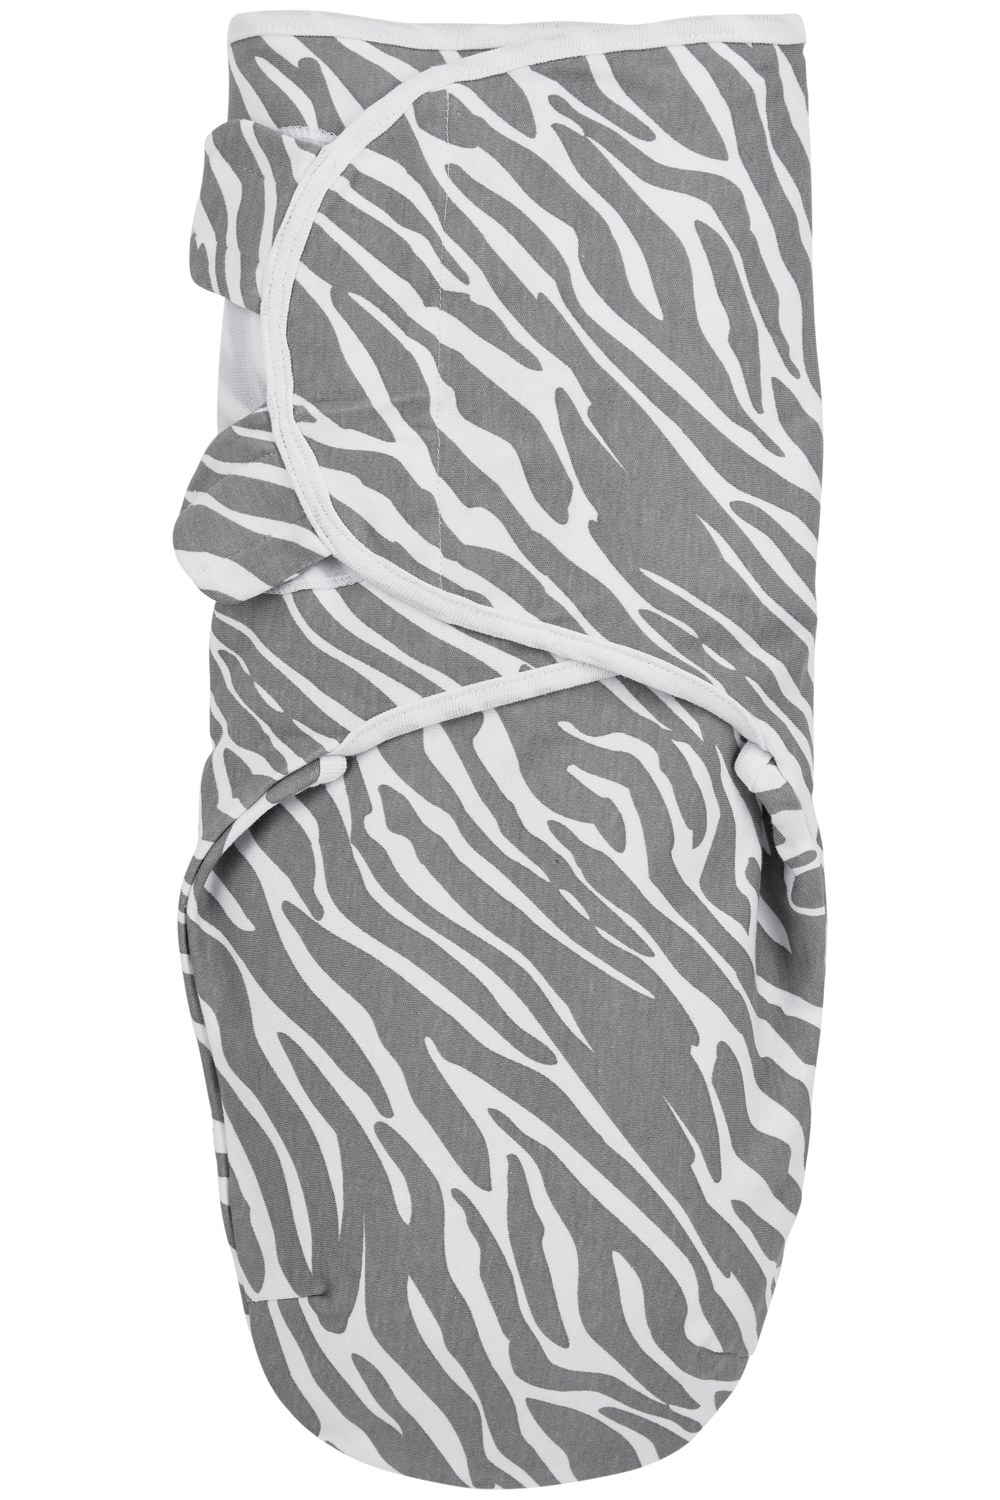 Swaddle Zebra - grey - 0-3 Months